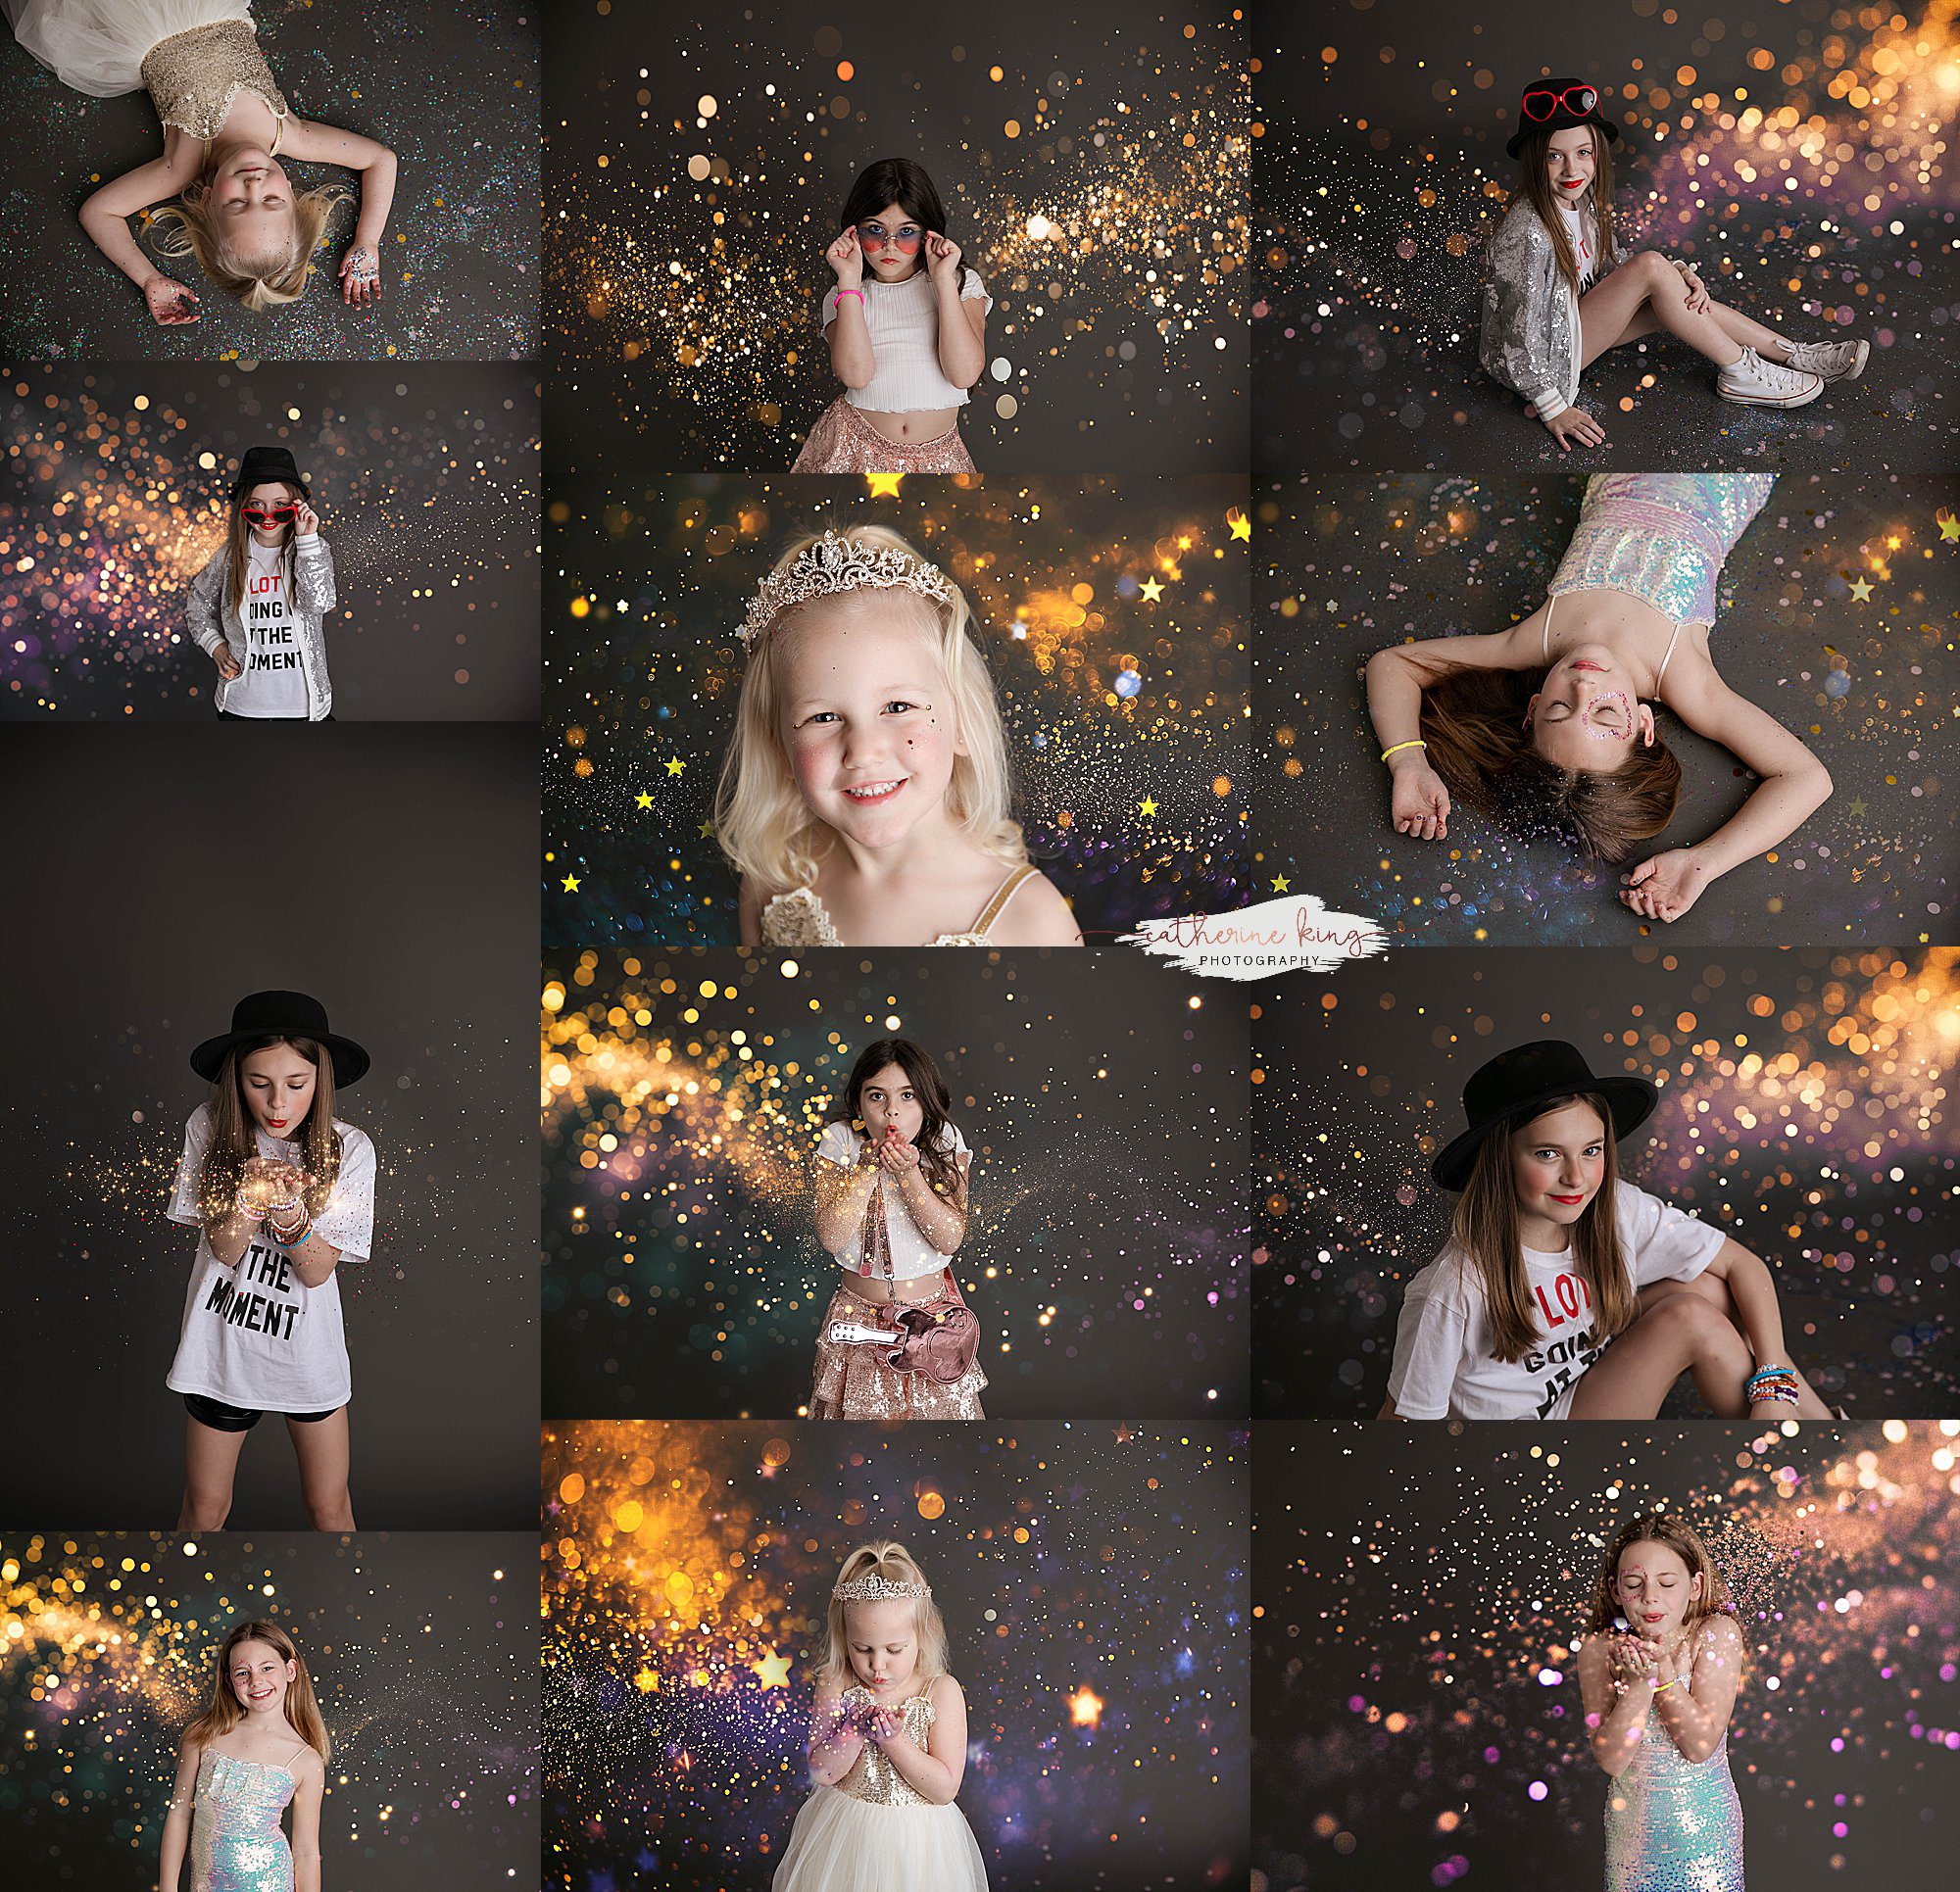 Capturing Childhood Magic: Glitter Mini Sessions at our Madison, CT Studio